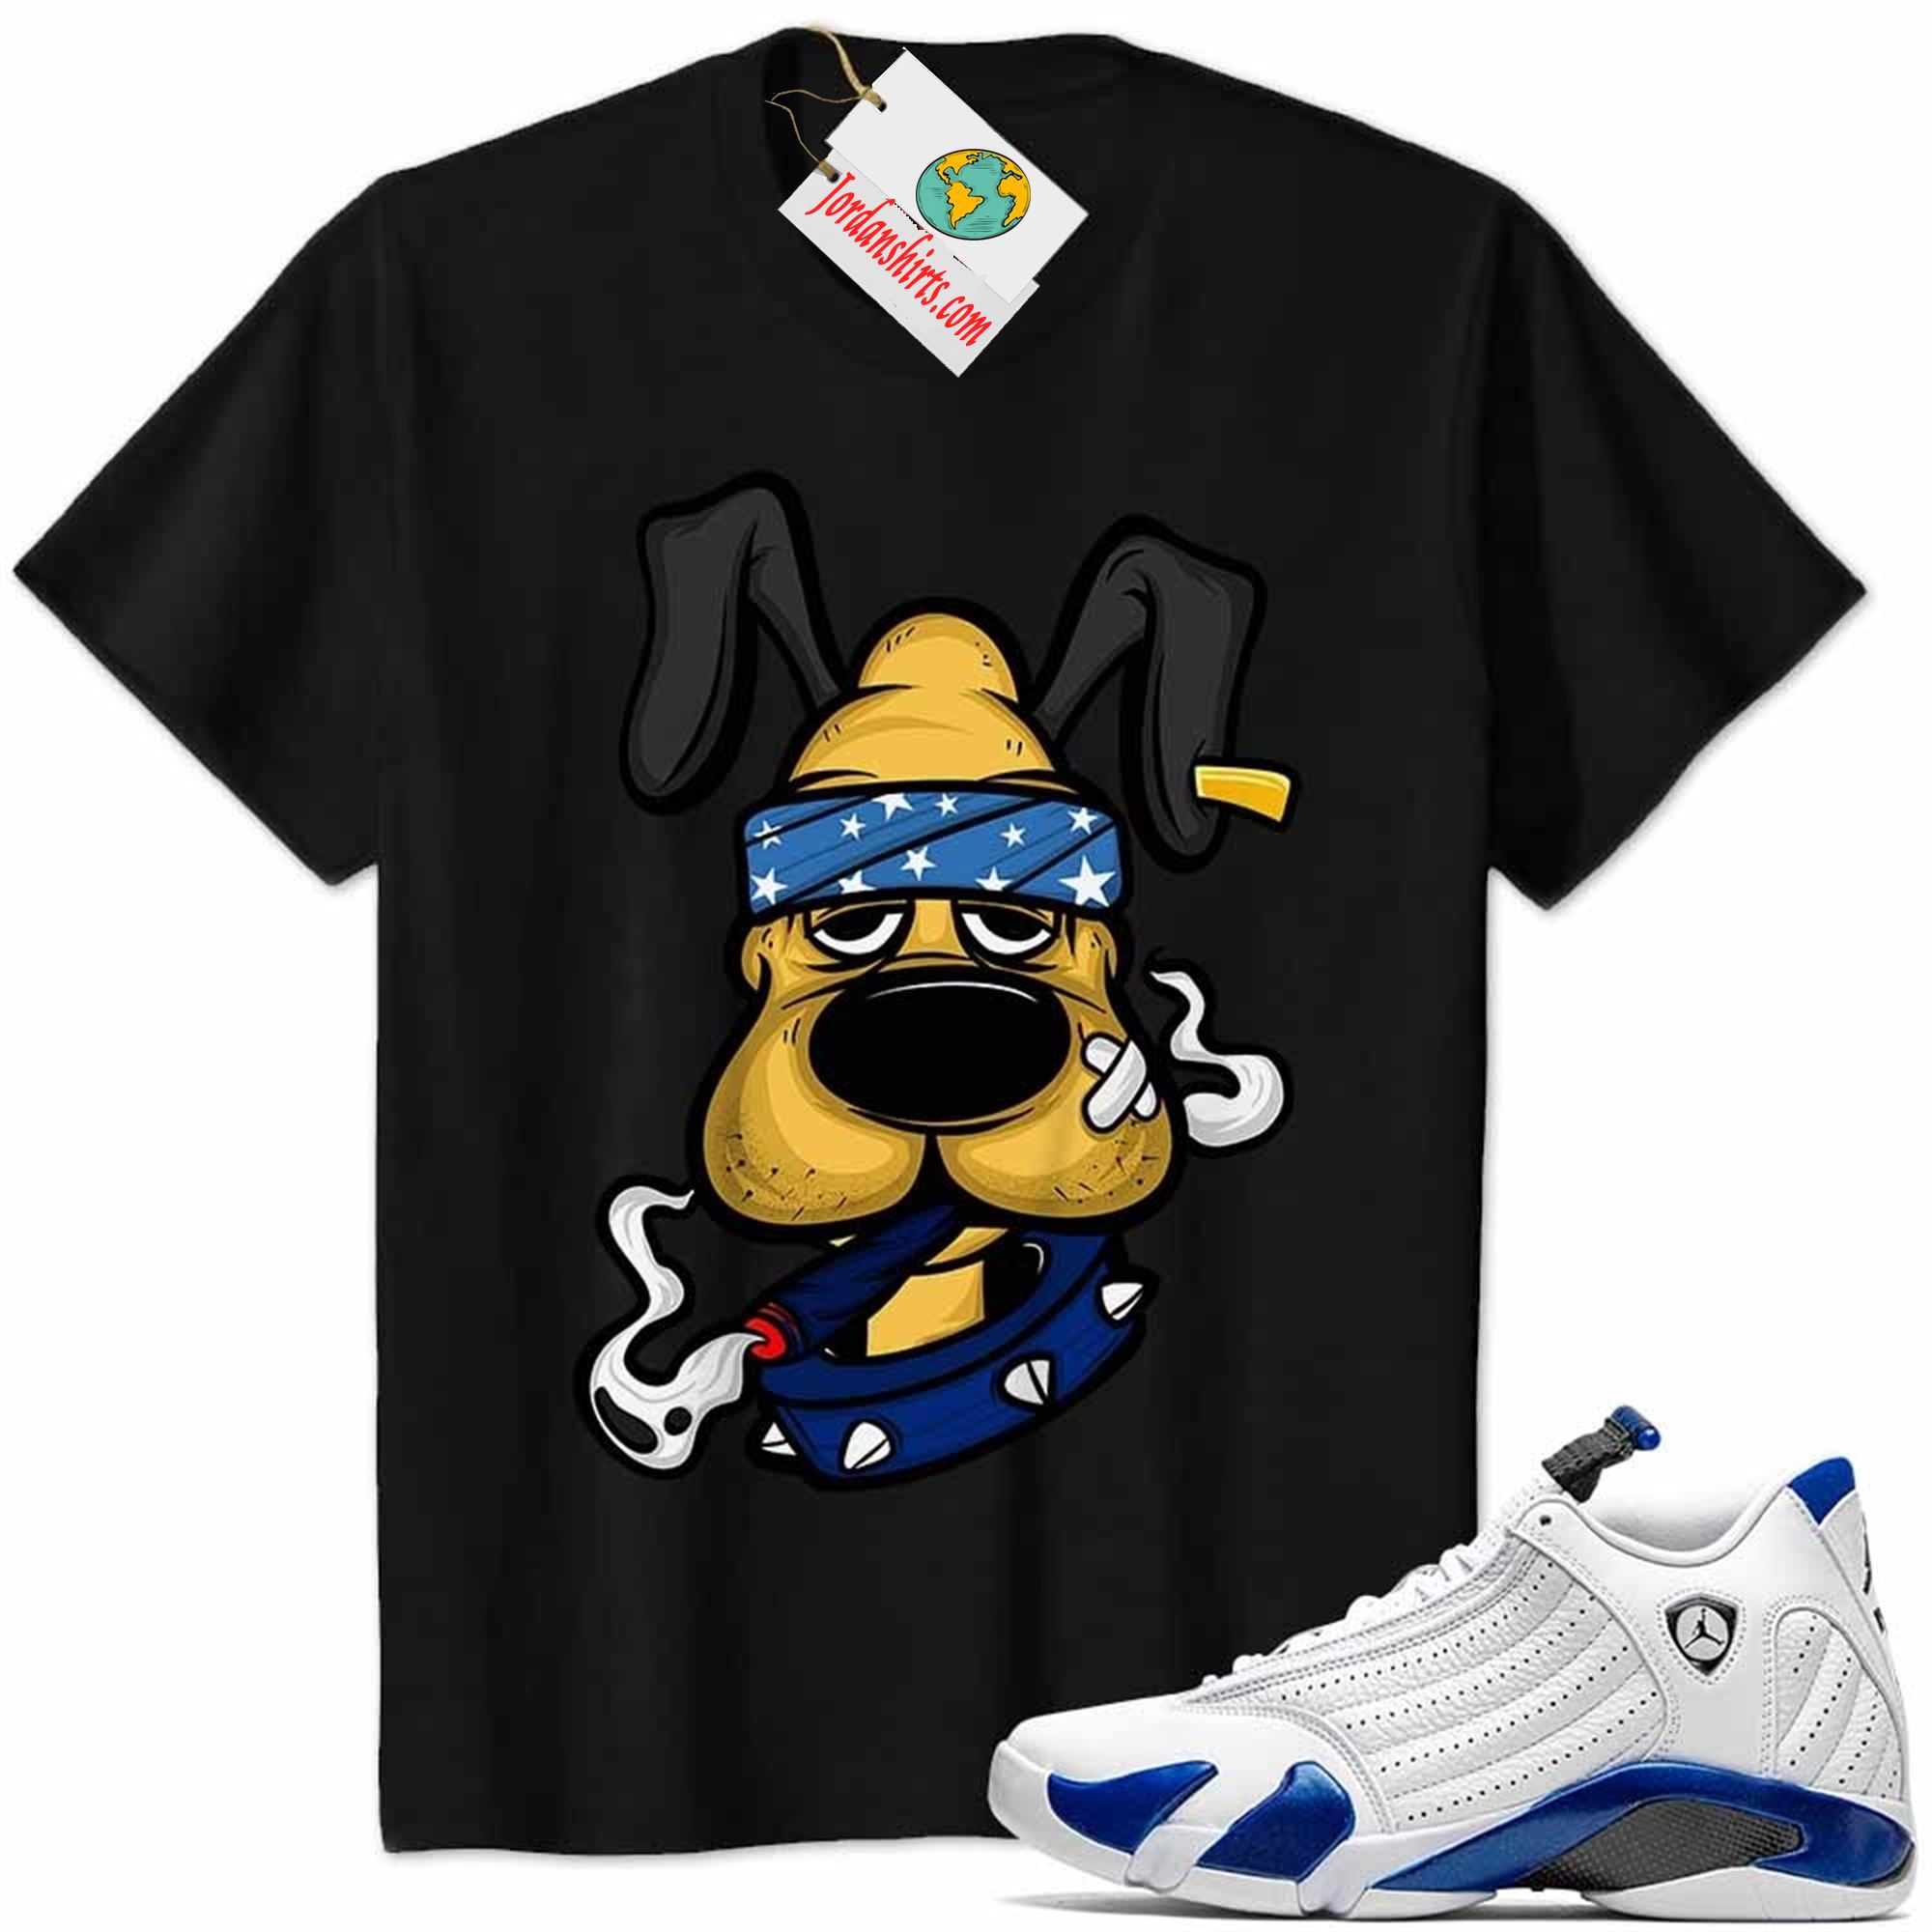 Jordan 14 Shirt, Gangster Pluto Smoke Weed Black Air Jordan 14 Hyper Royal 14s Full Size Up To 5xl